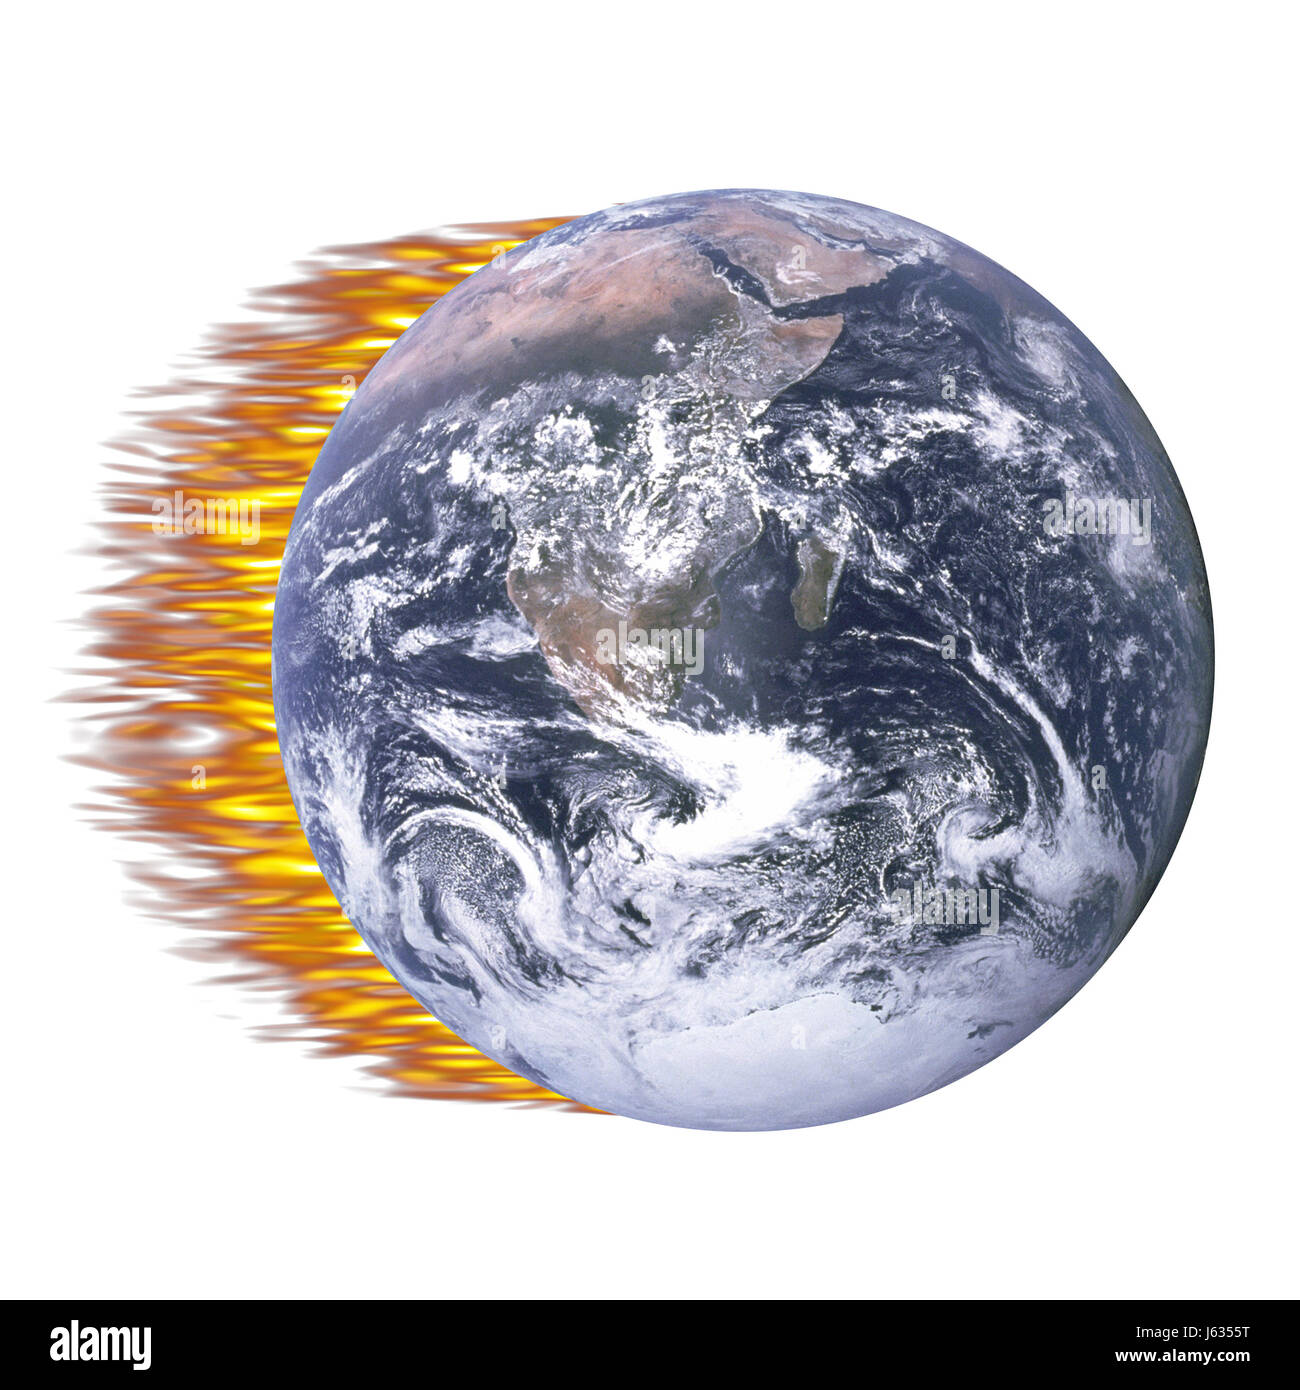 Feuer Flächenbrand Katastrophe Globus Planet Erde Welt brennen Kugel Bewegung Stockfoto